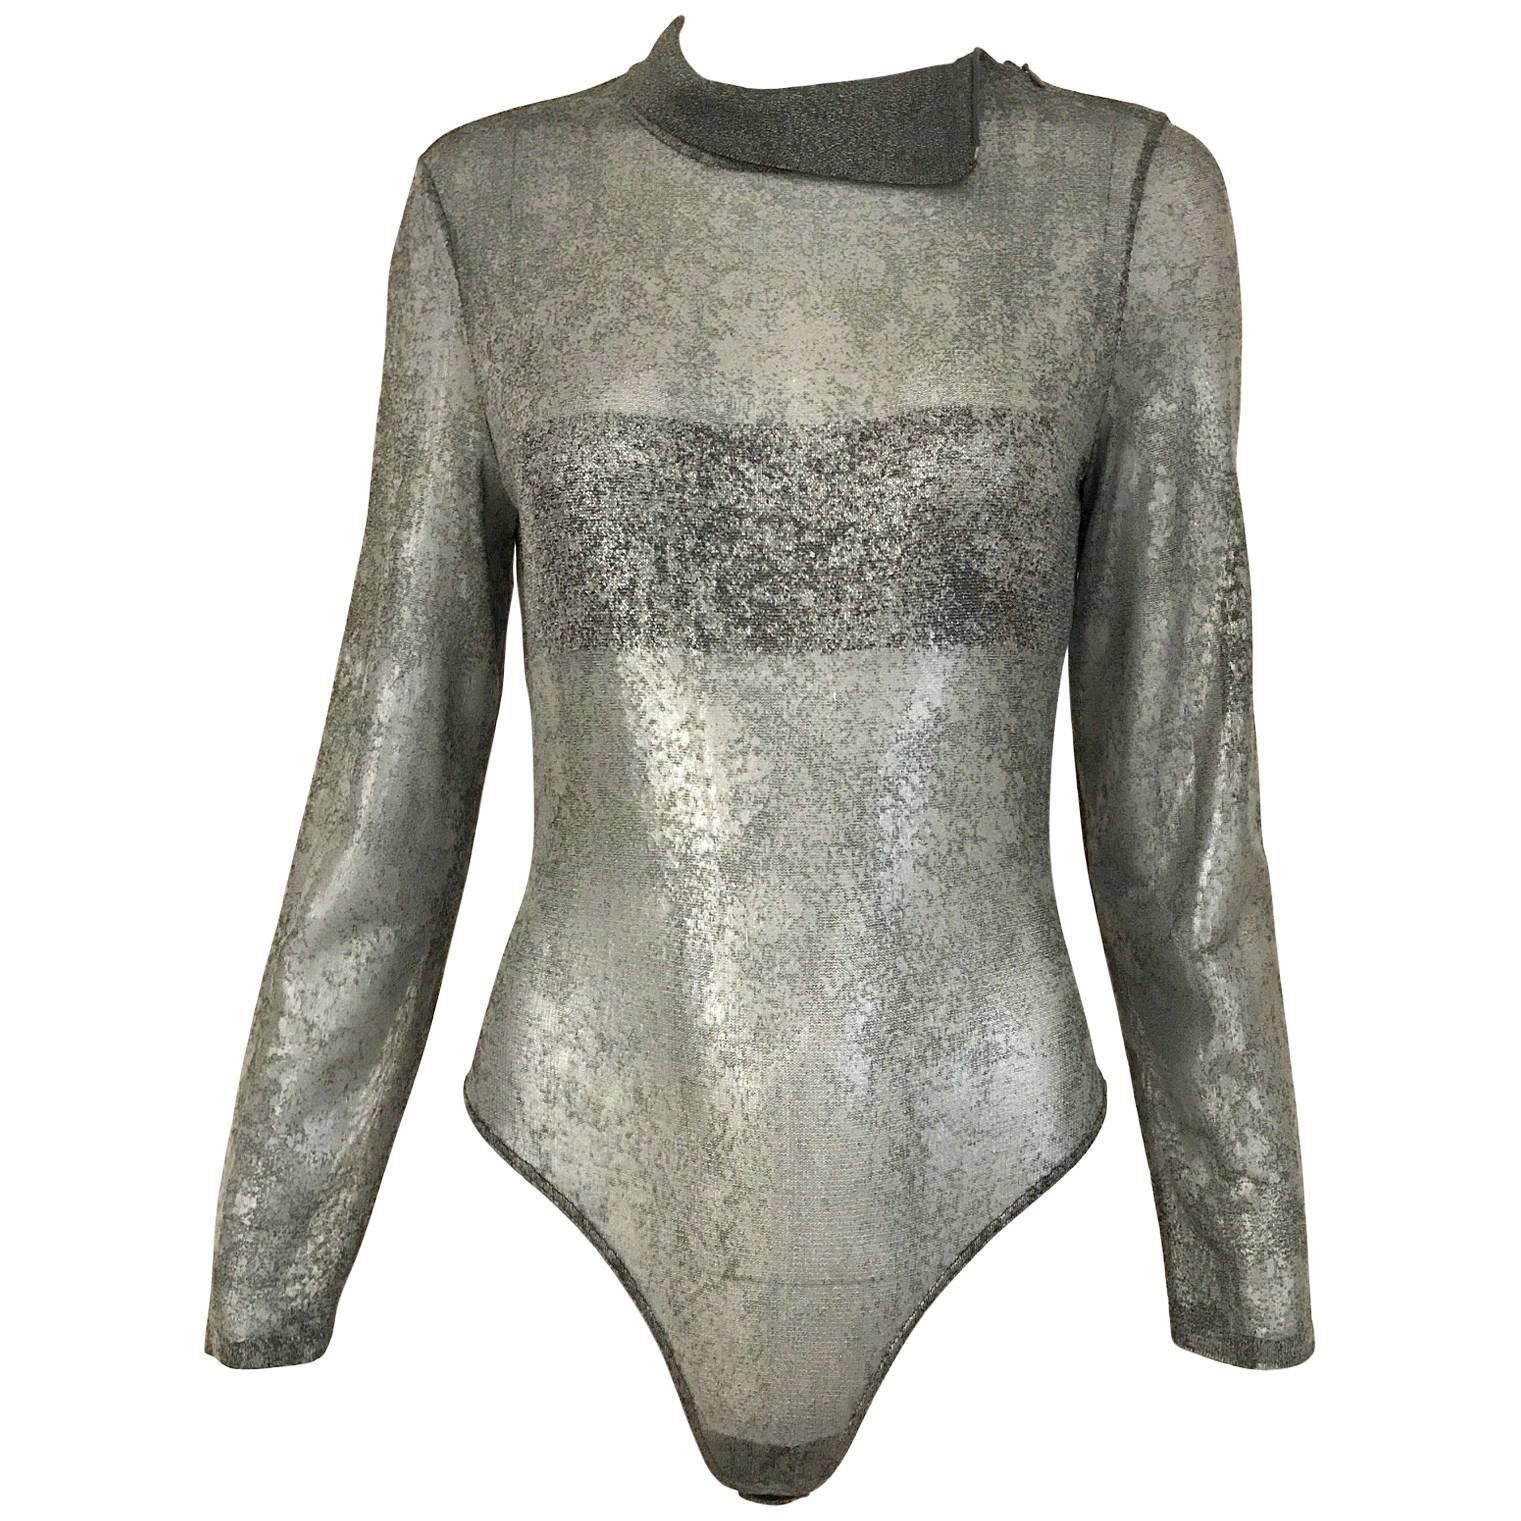 Vintage GIANFRANCO FERRE Silver Grey Metallic Bodysuit